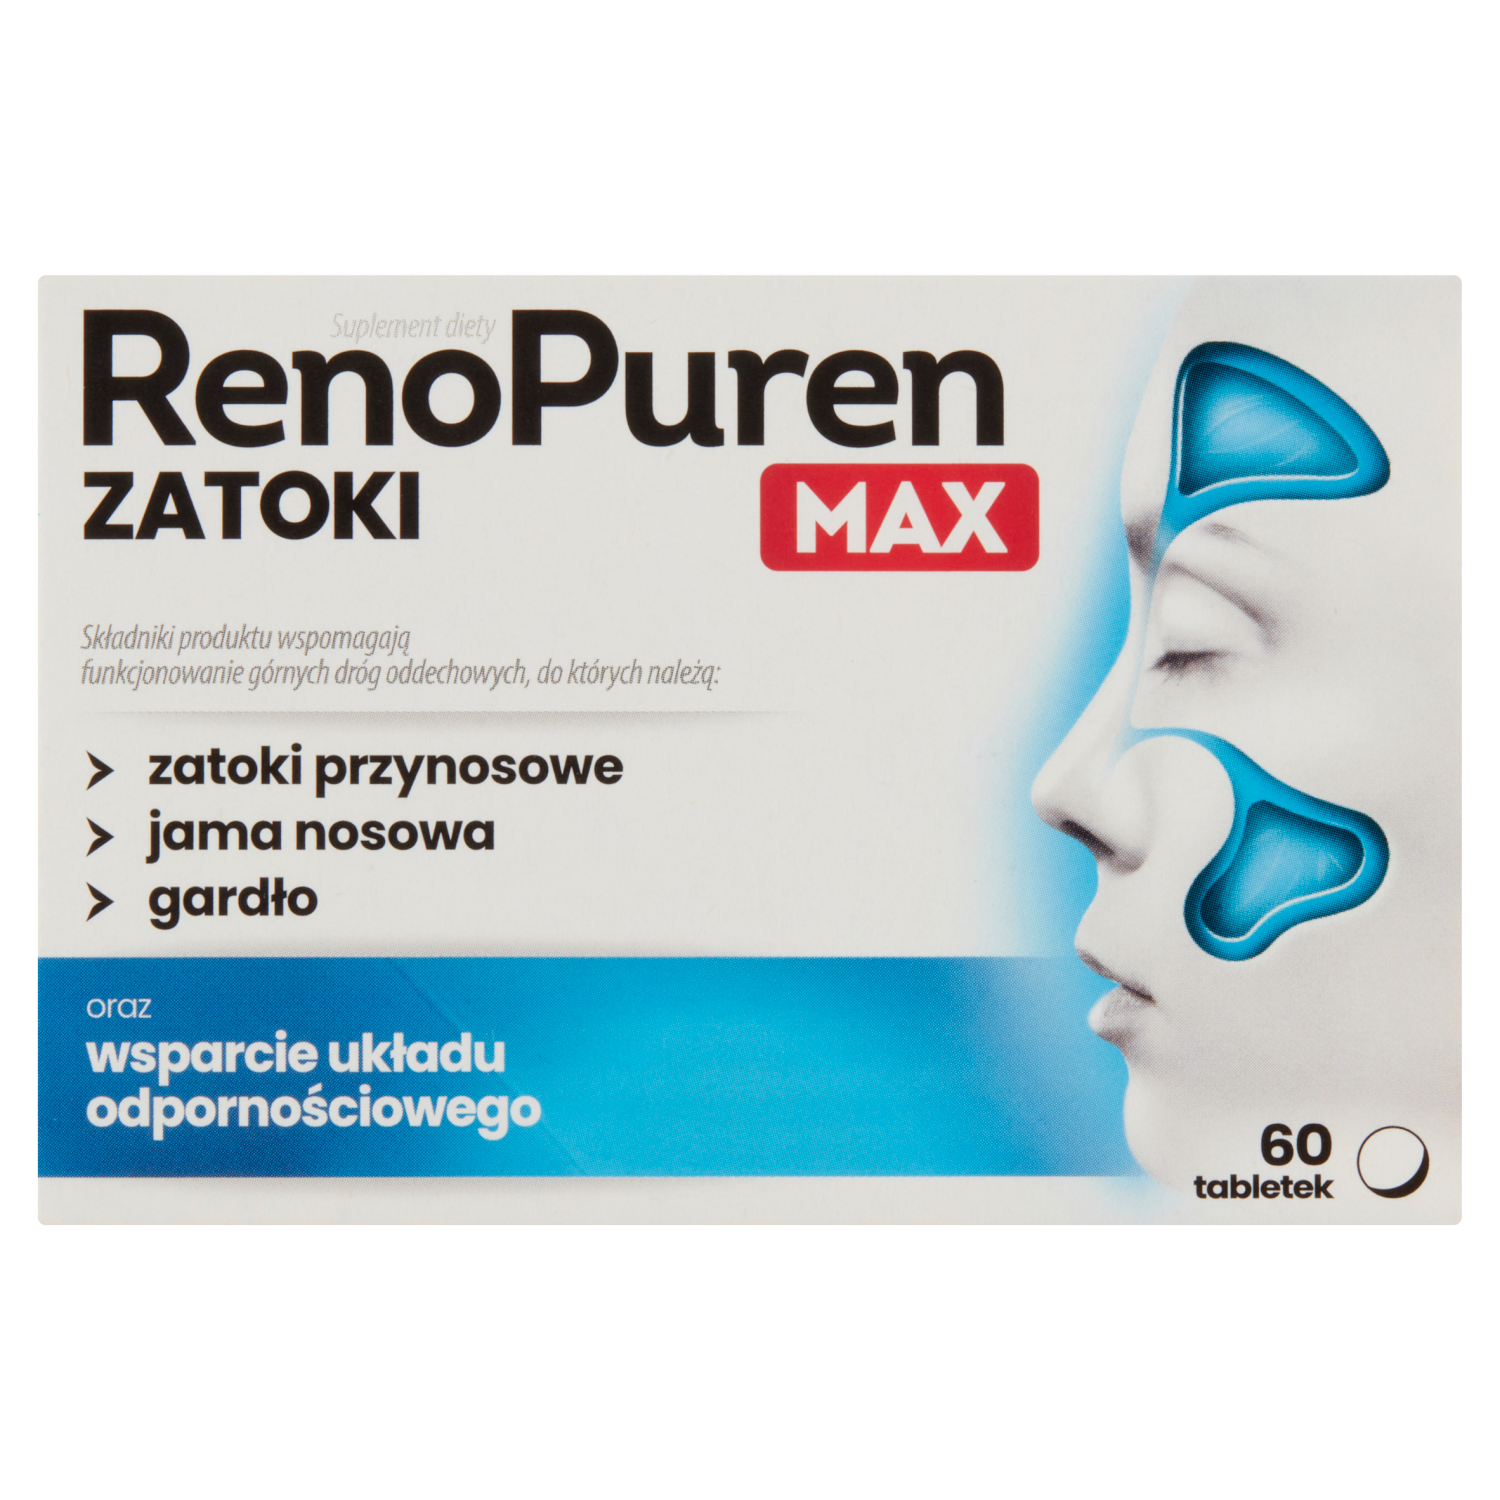 liporedium биологически активная добавка 60 таблеток 1 упаковка Renopuren Zatoki Max биологически активная добавка, 60 таблеток/1 упаковка